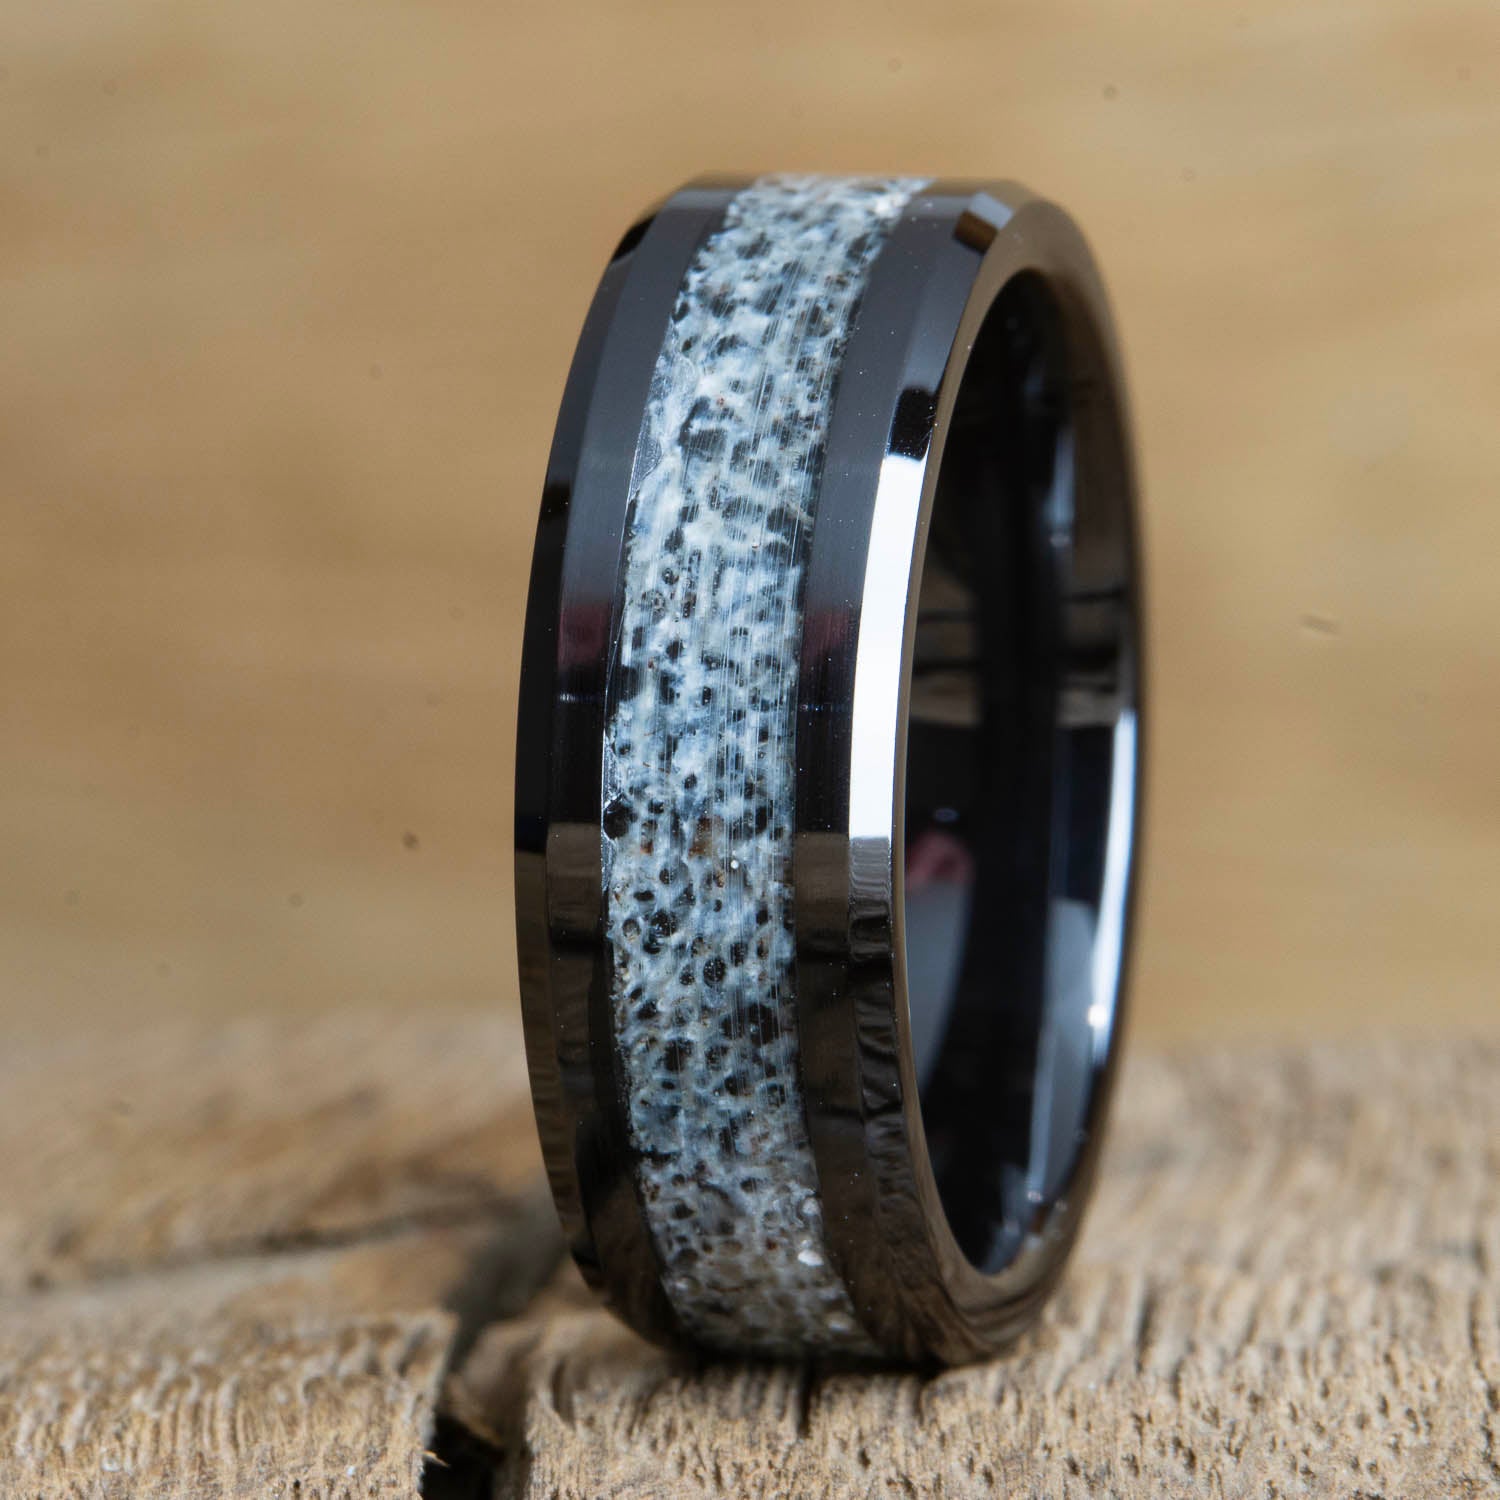 Beveled edge black ring with Antler